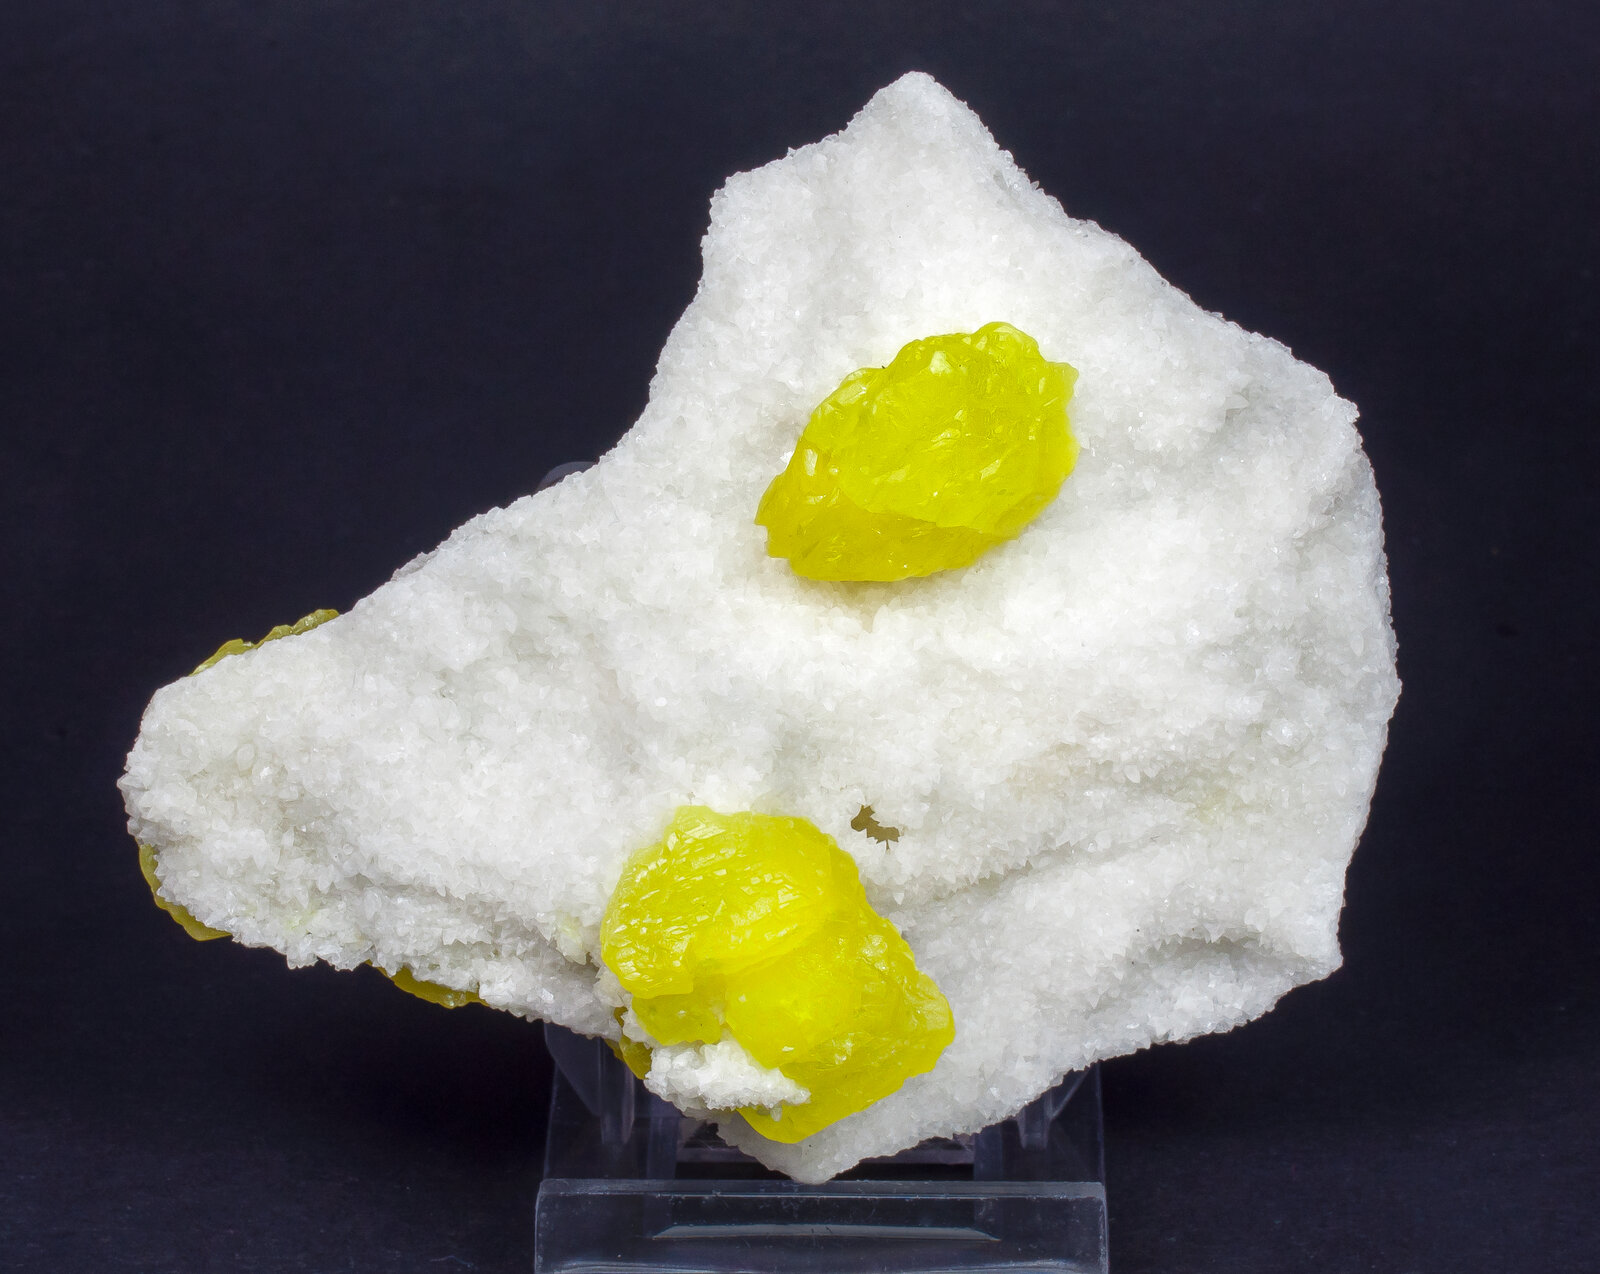 specimens/s_imagesAO5/Sulfur-NVX38AO5f.jpg